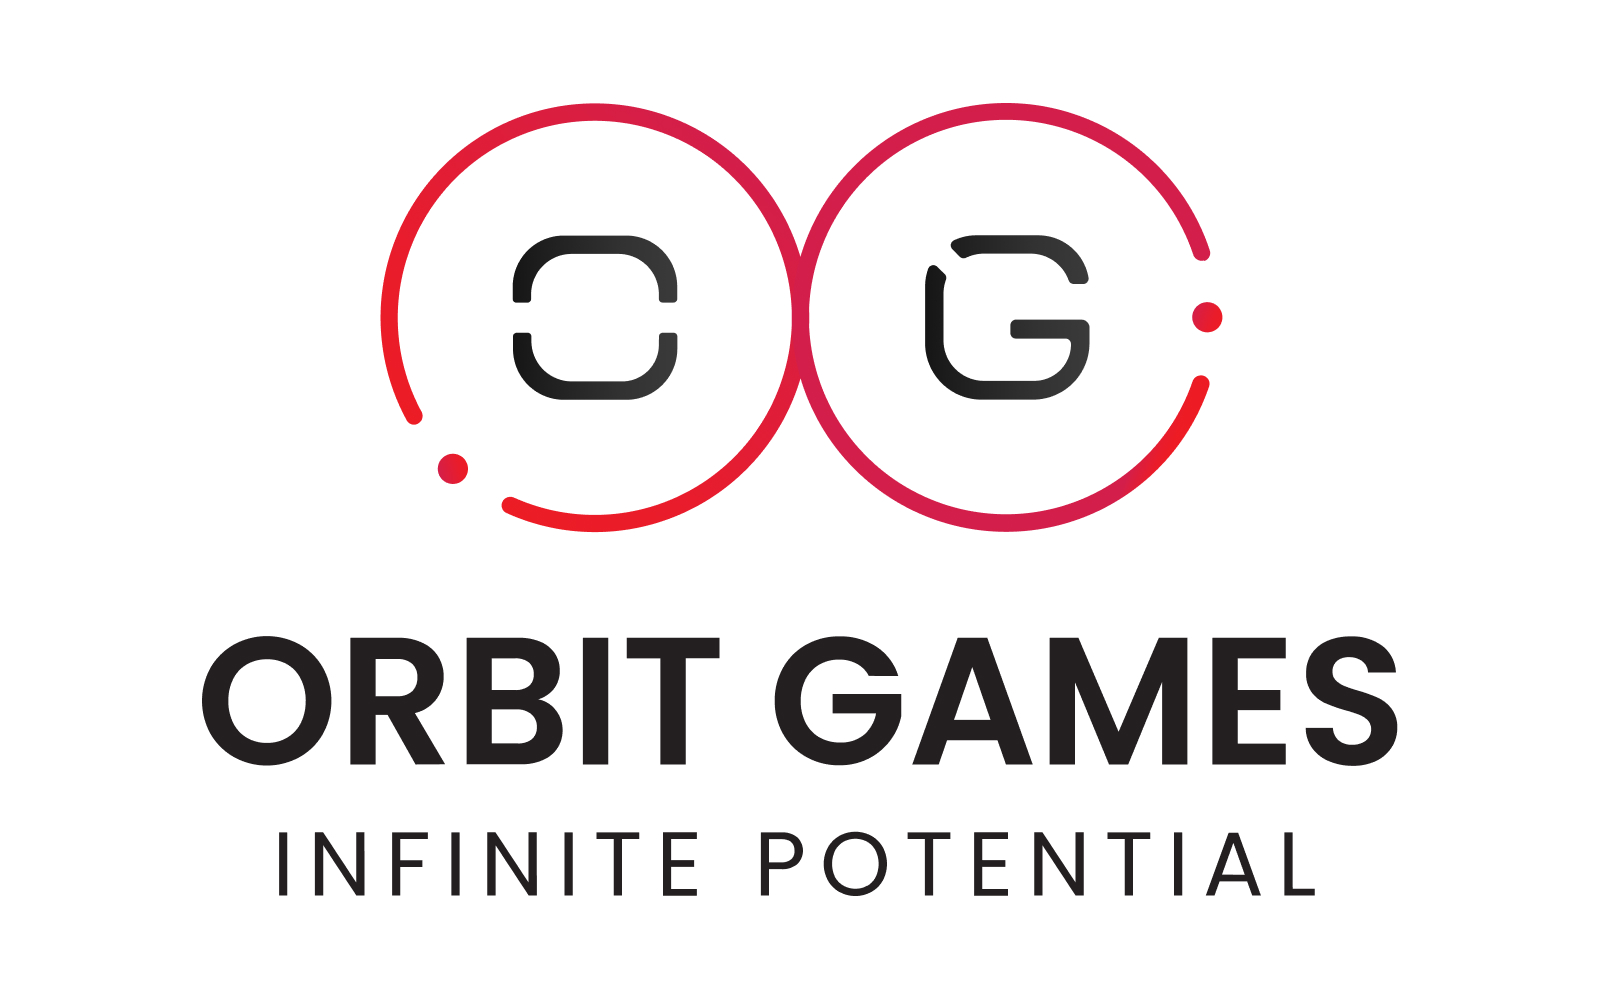 Orbit Games - Gaming Company Logo Template